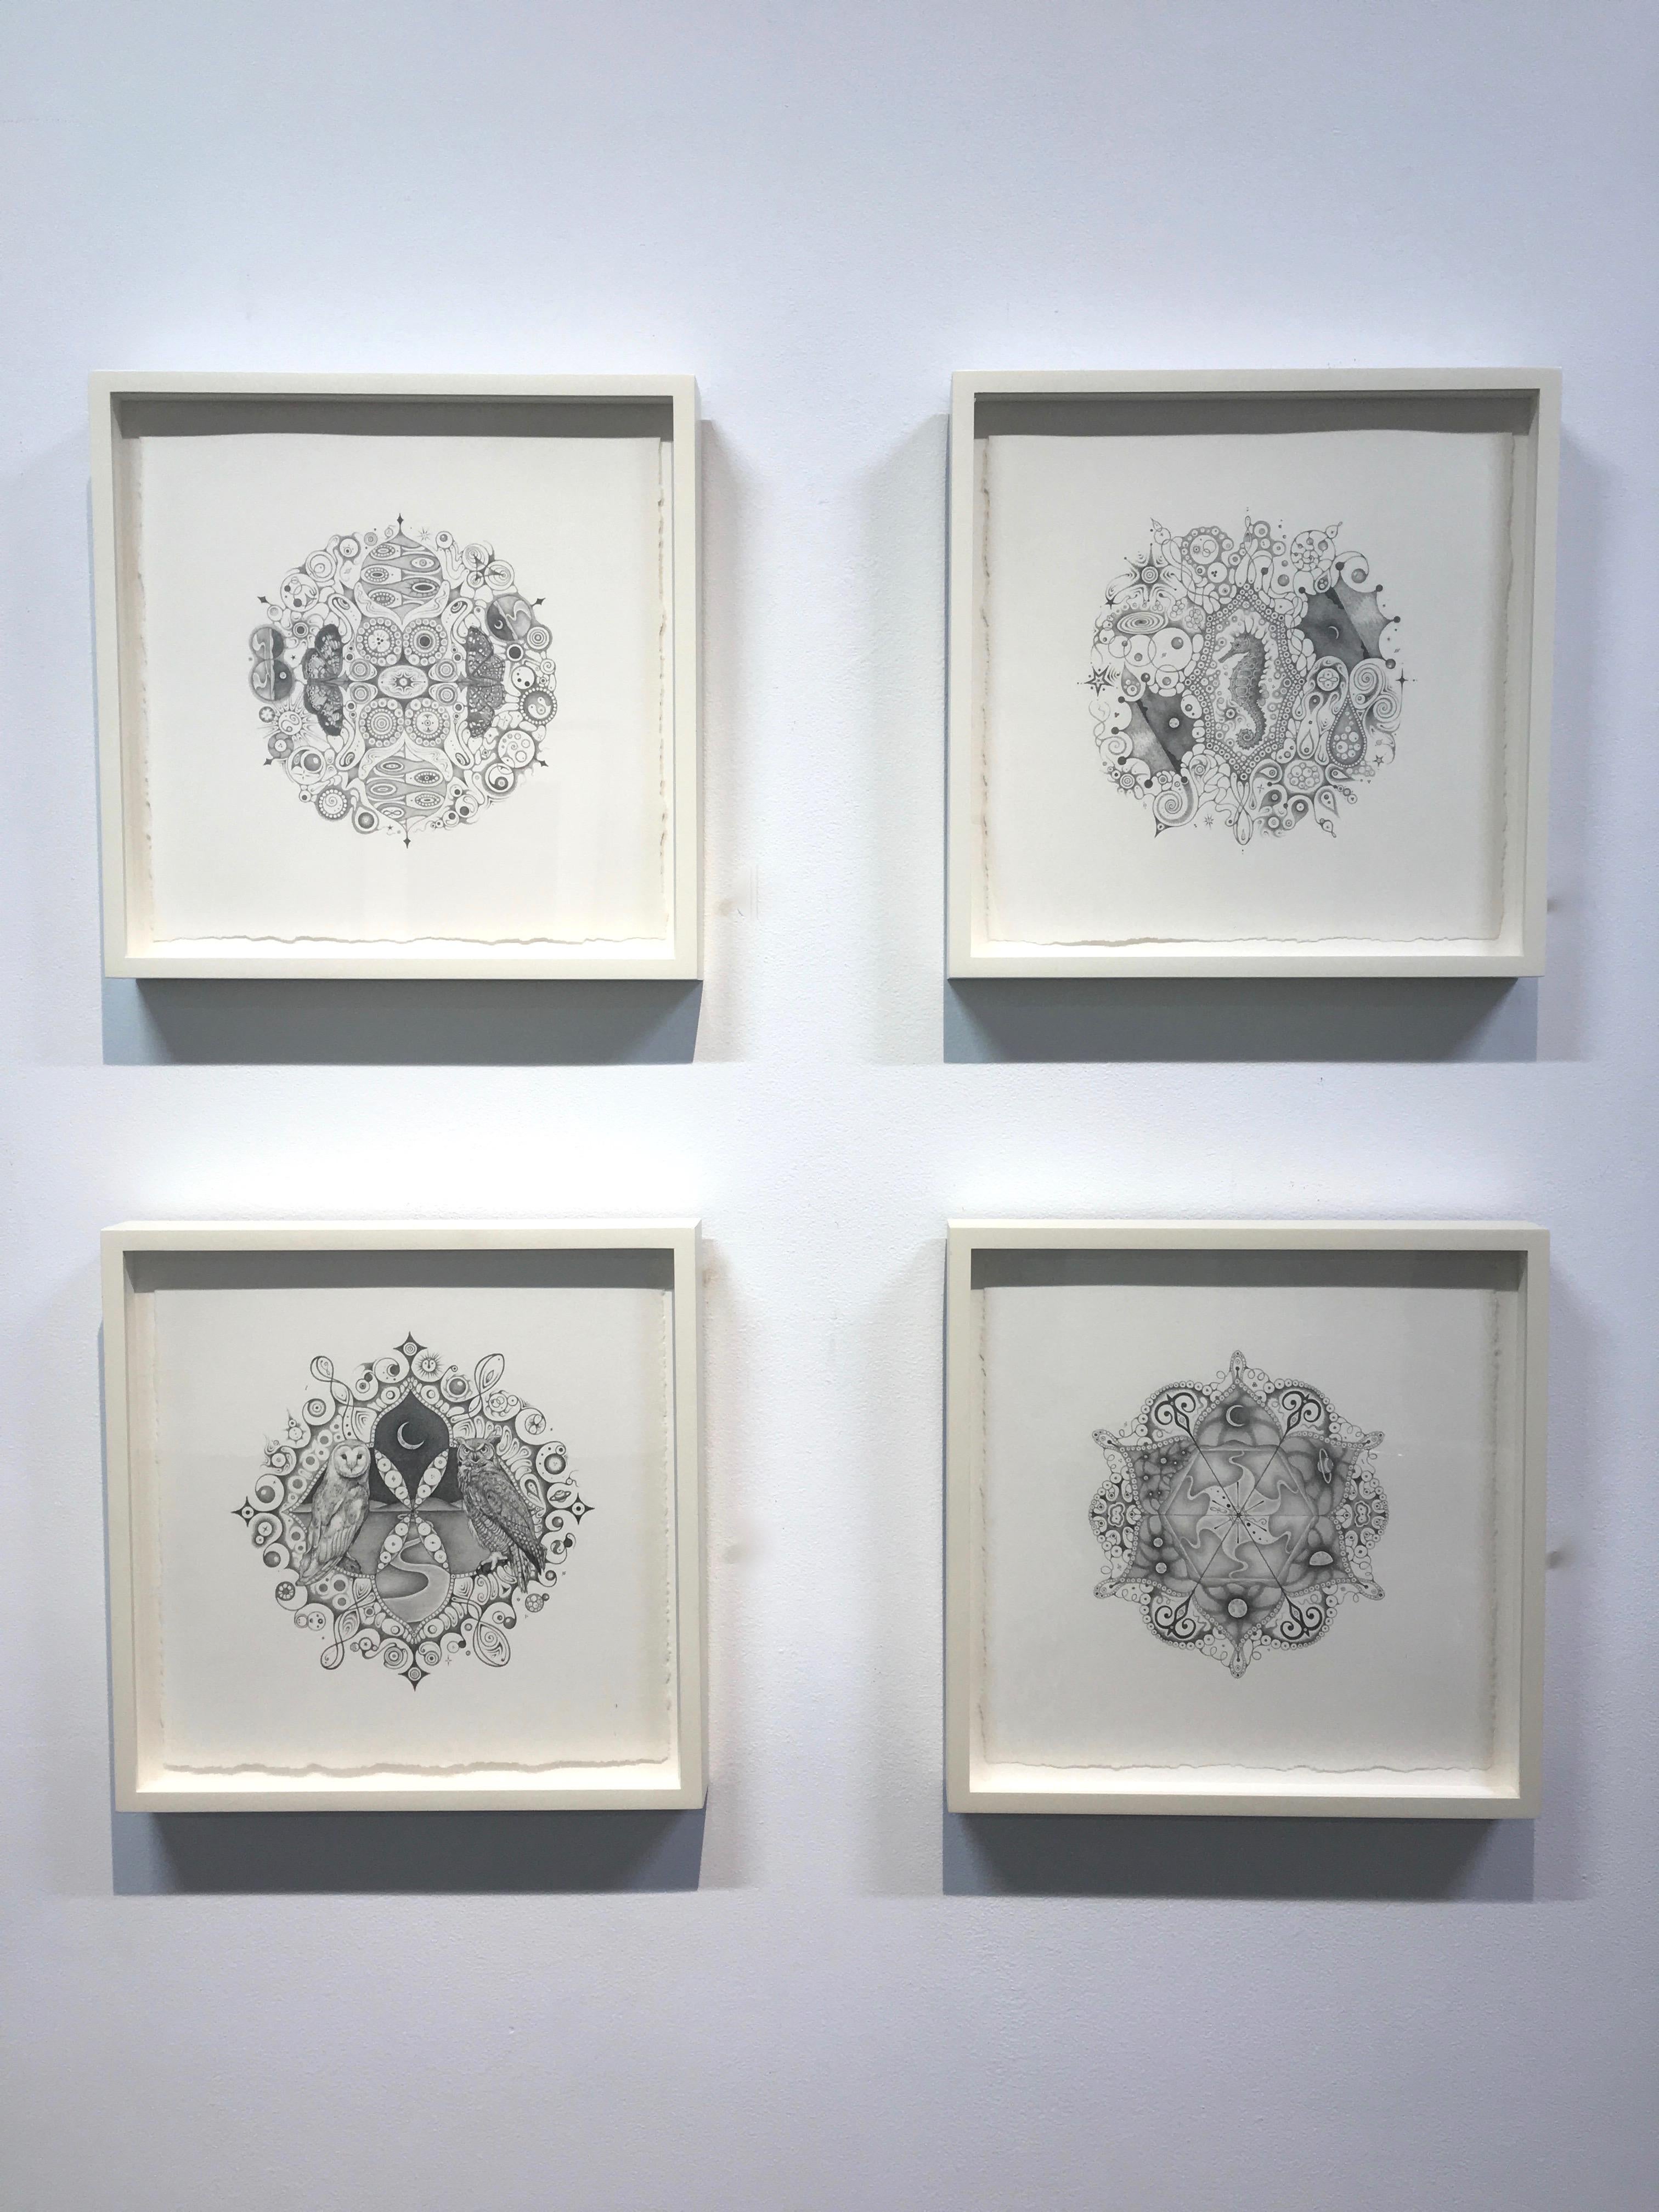 Snowflakes 108 Matrix, Planet and Crescent Moon Mandala Pencil Drawing For Sale 2